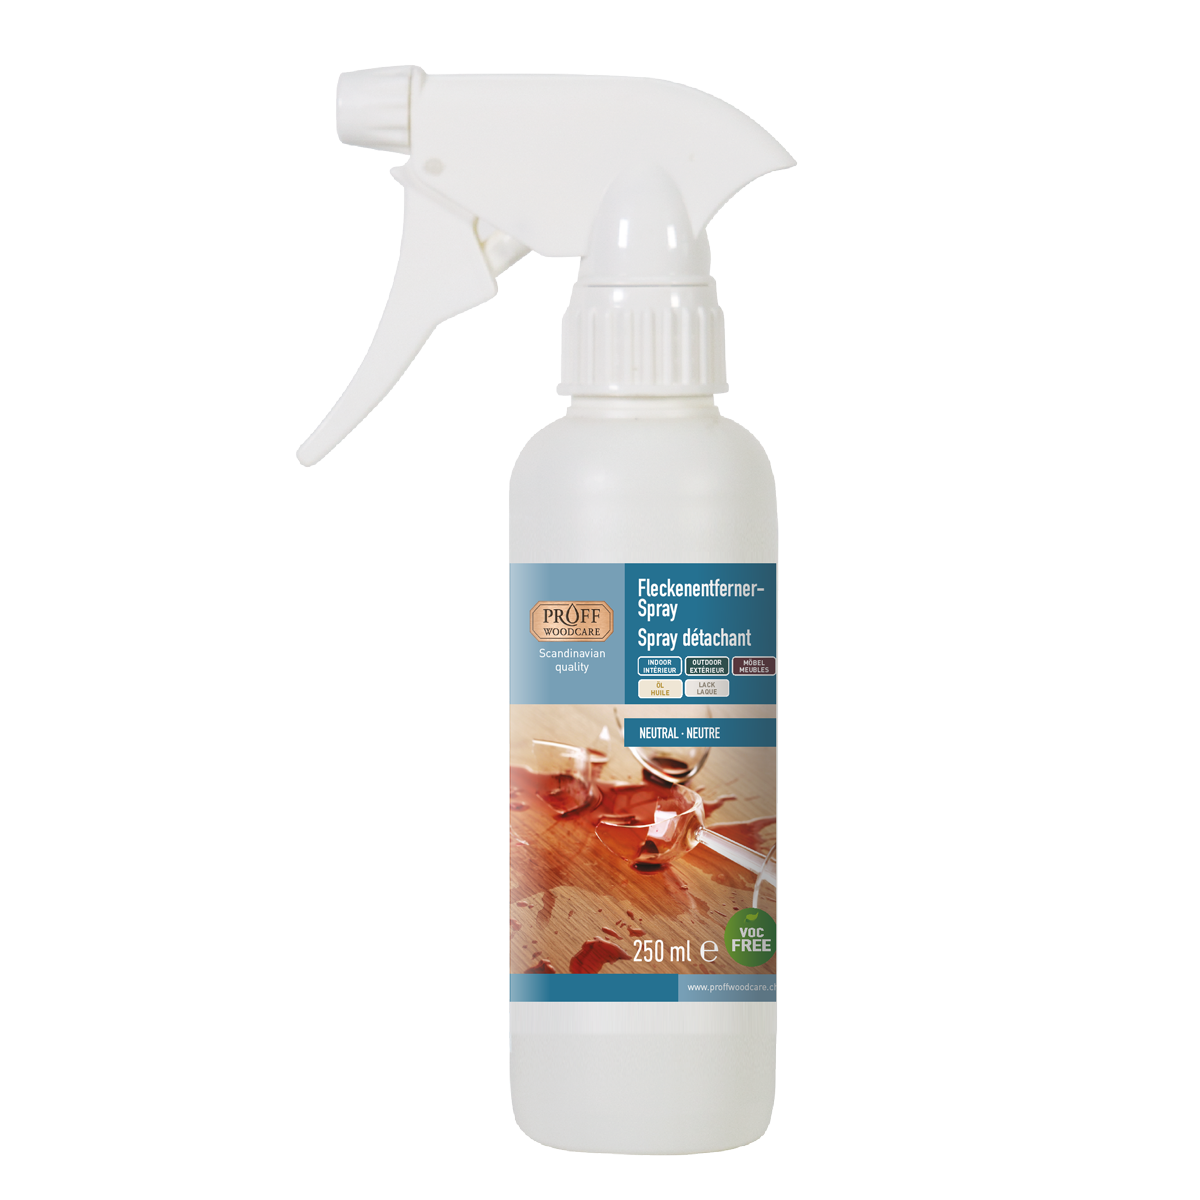 Fleckenentferner-Spray
Geb. à 250 ml